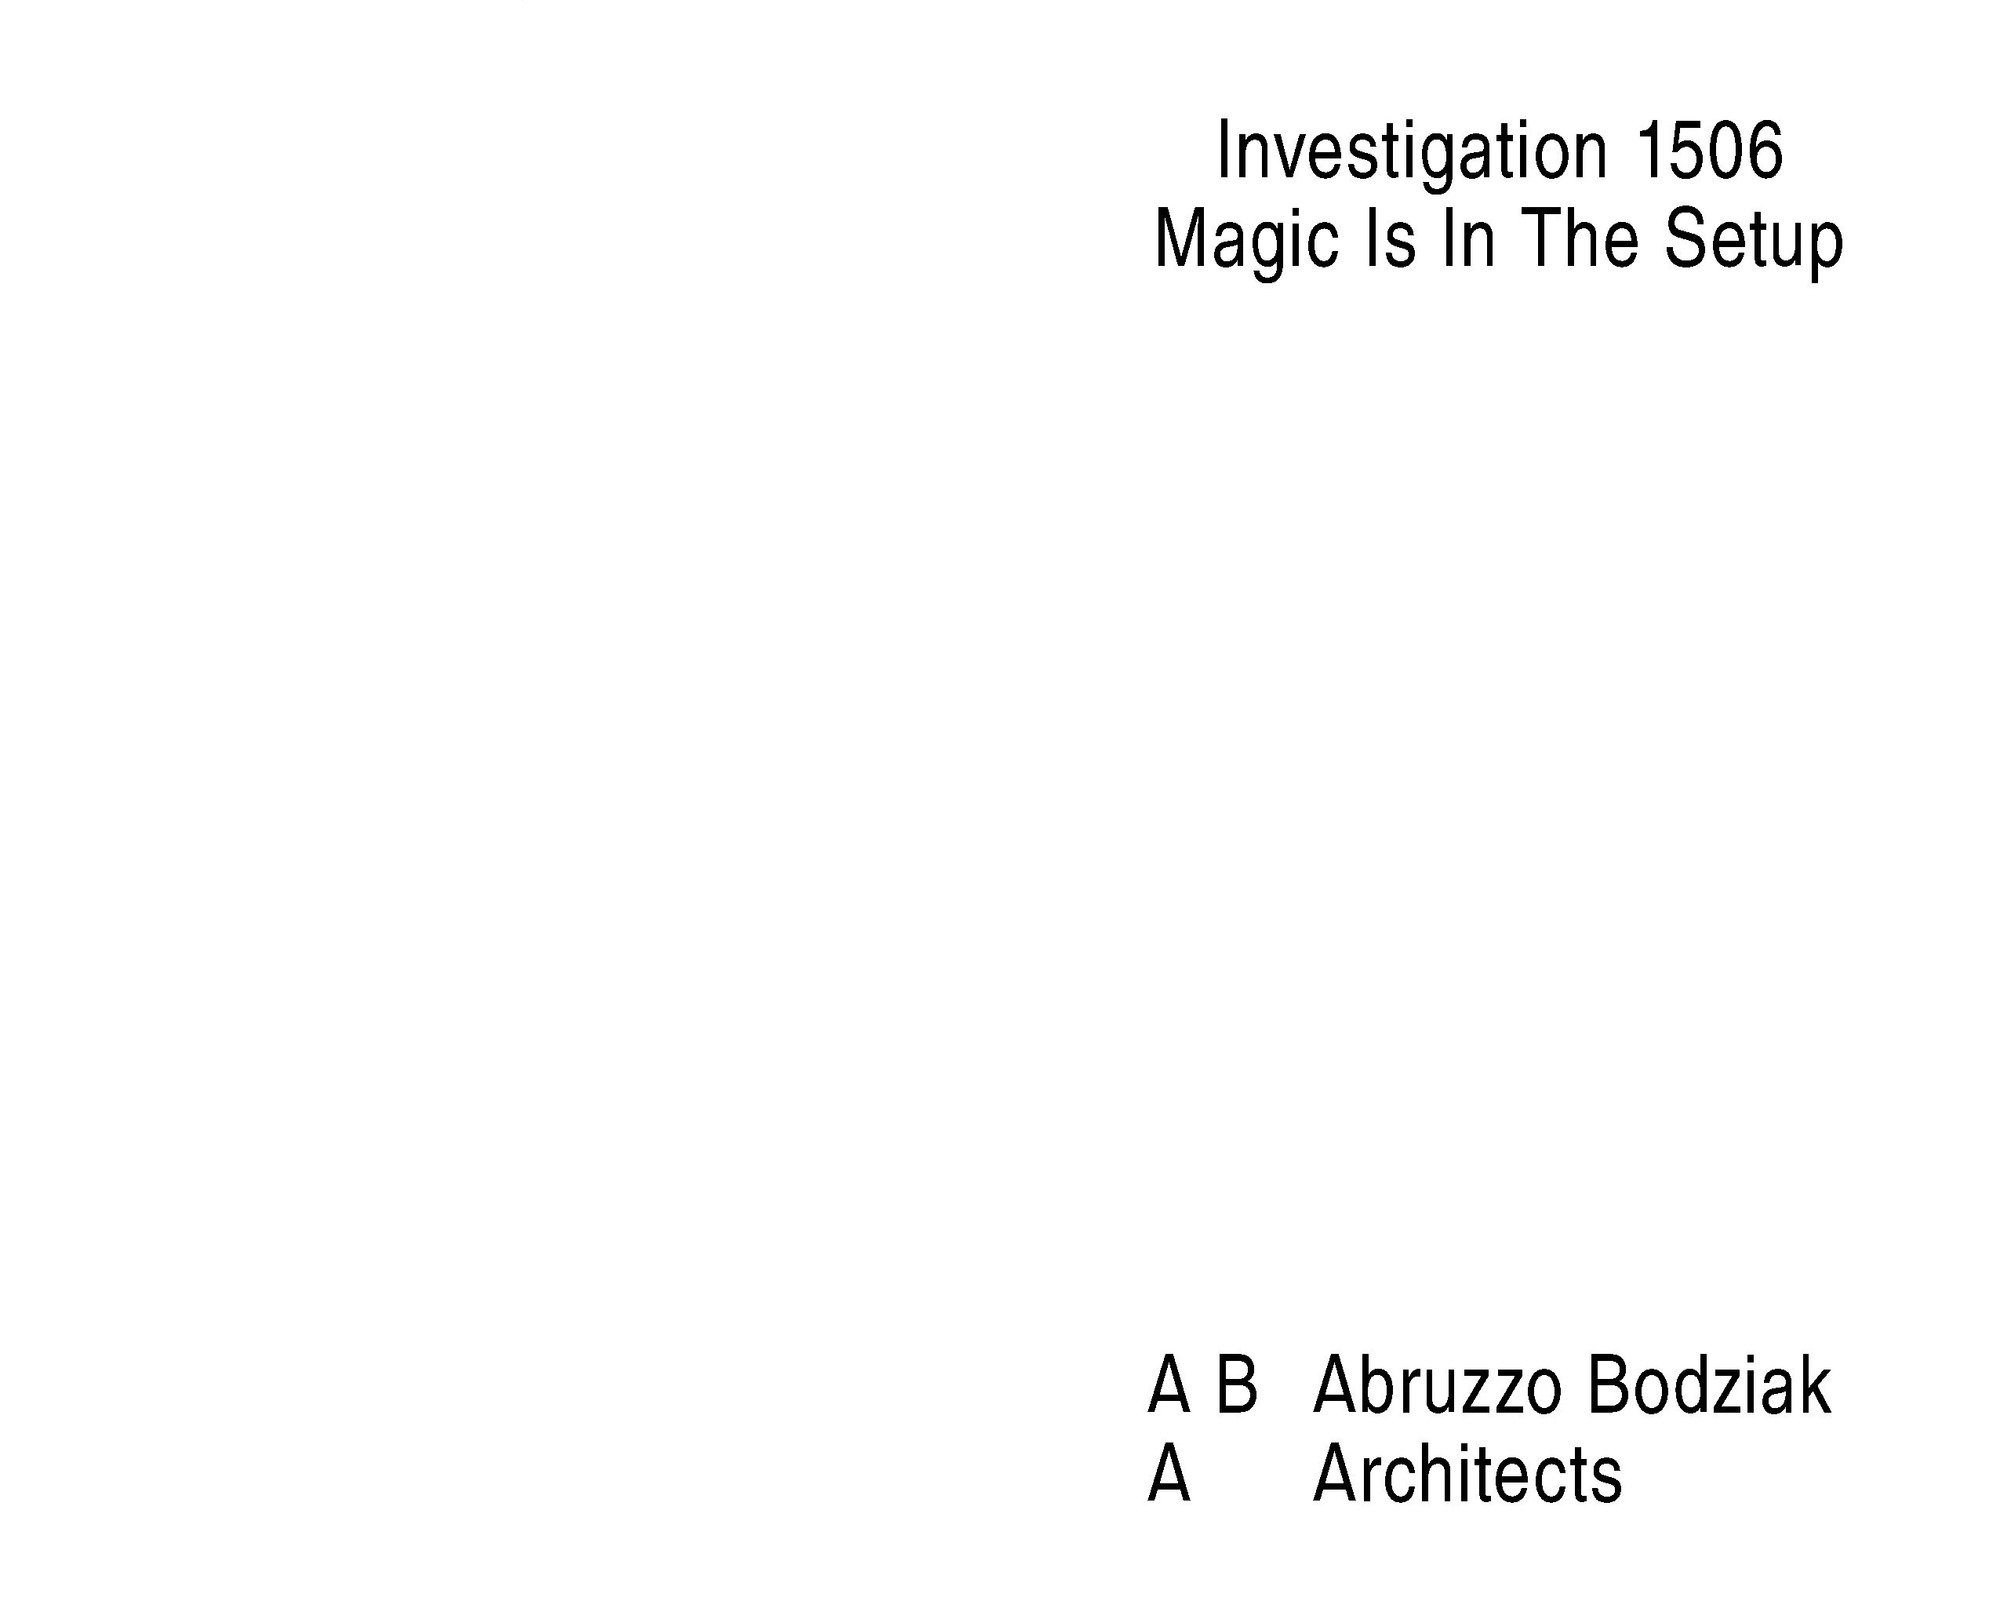 1506 magic investigation page 02 2000 xxx q85